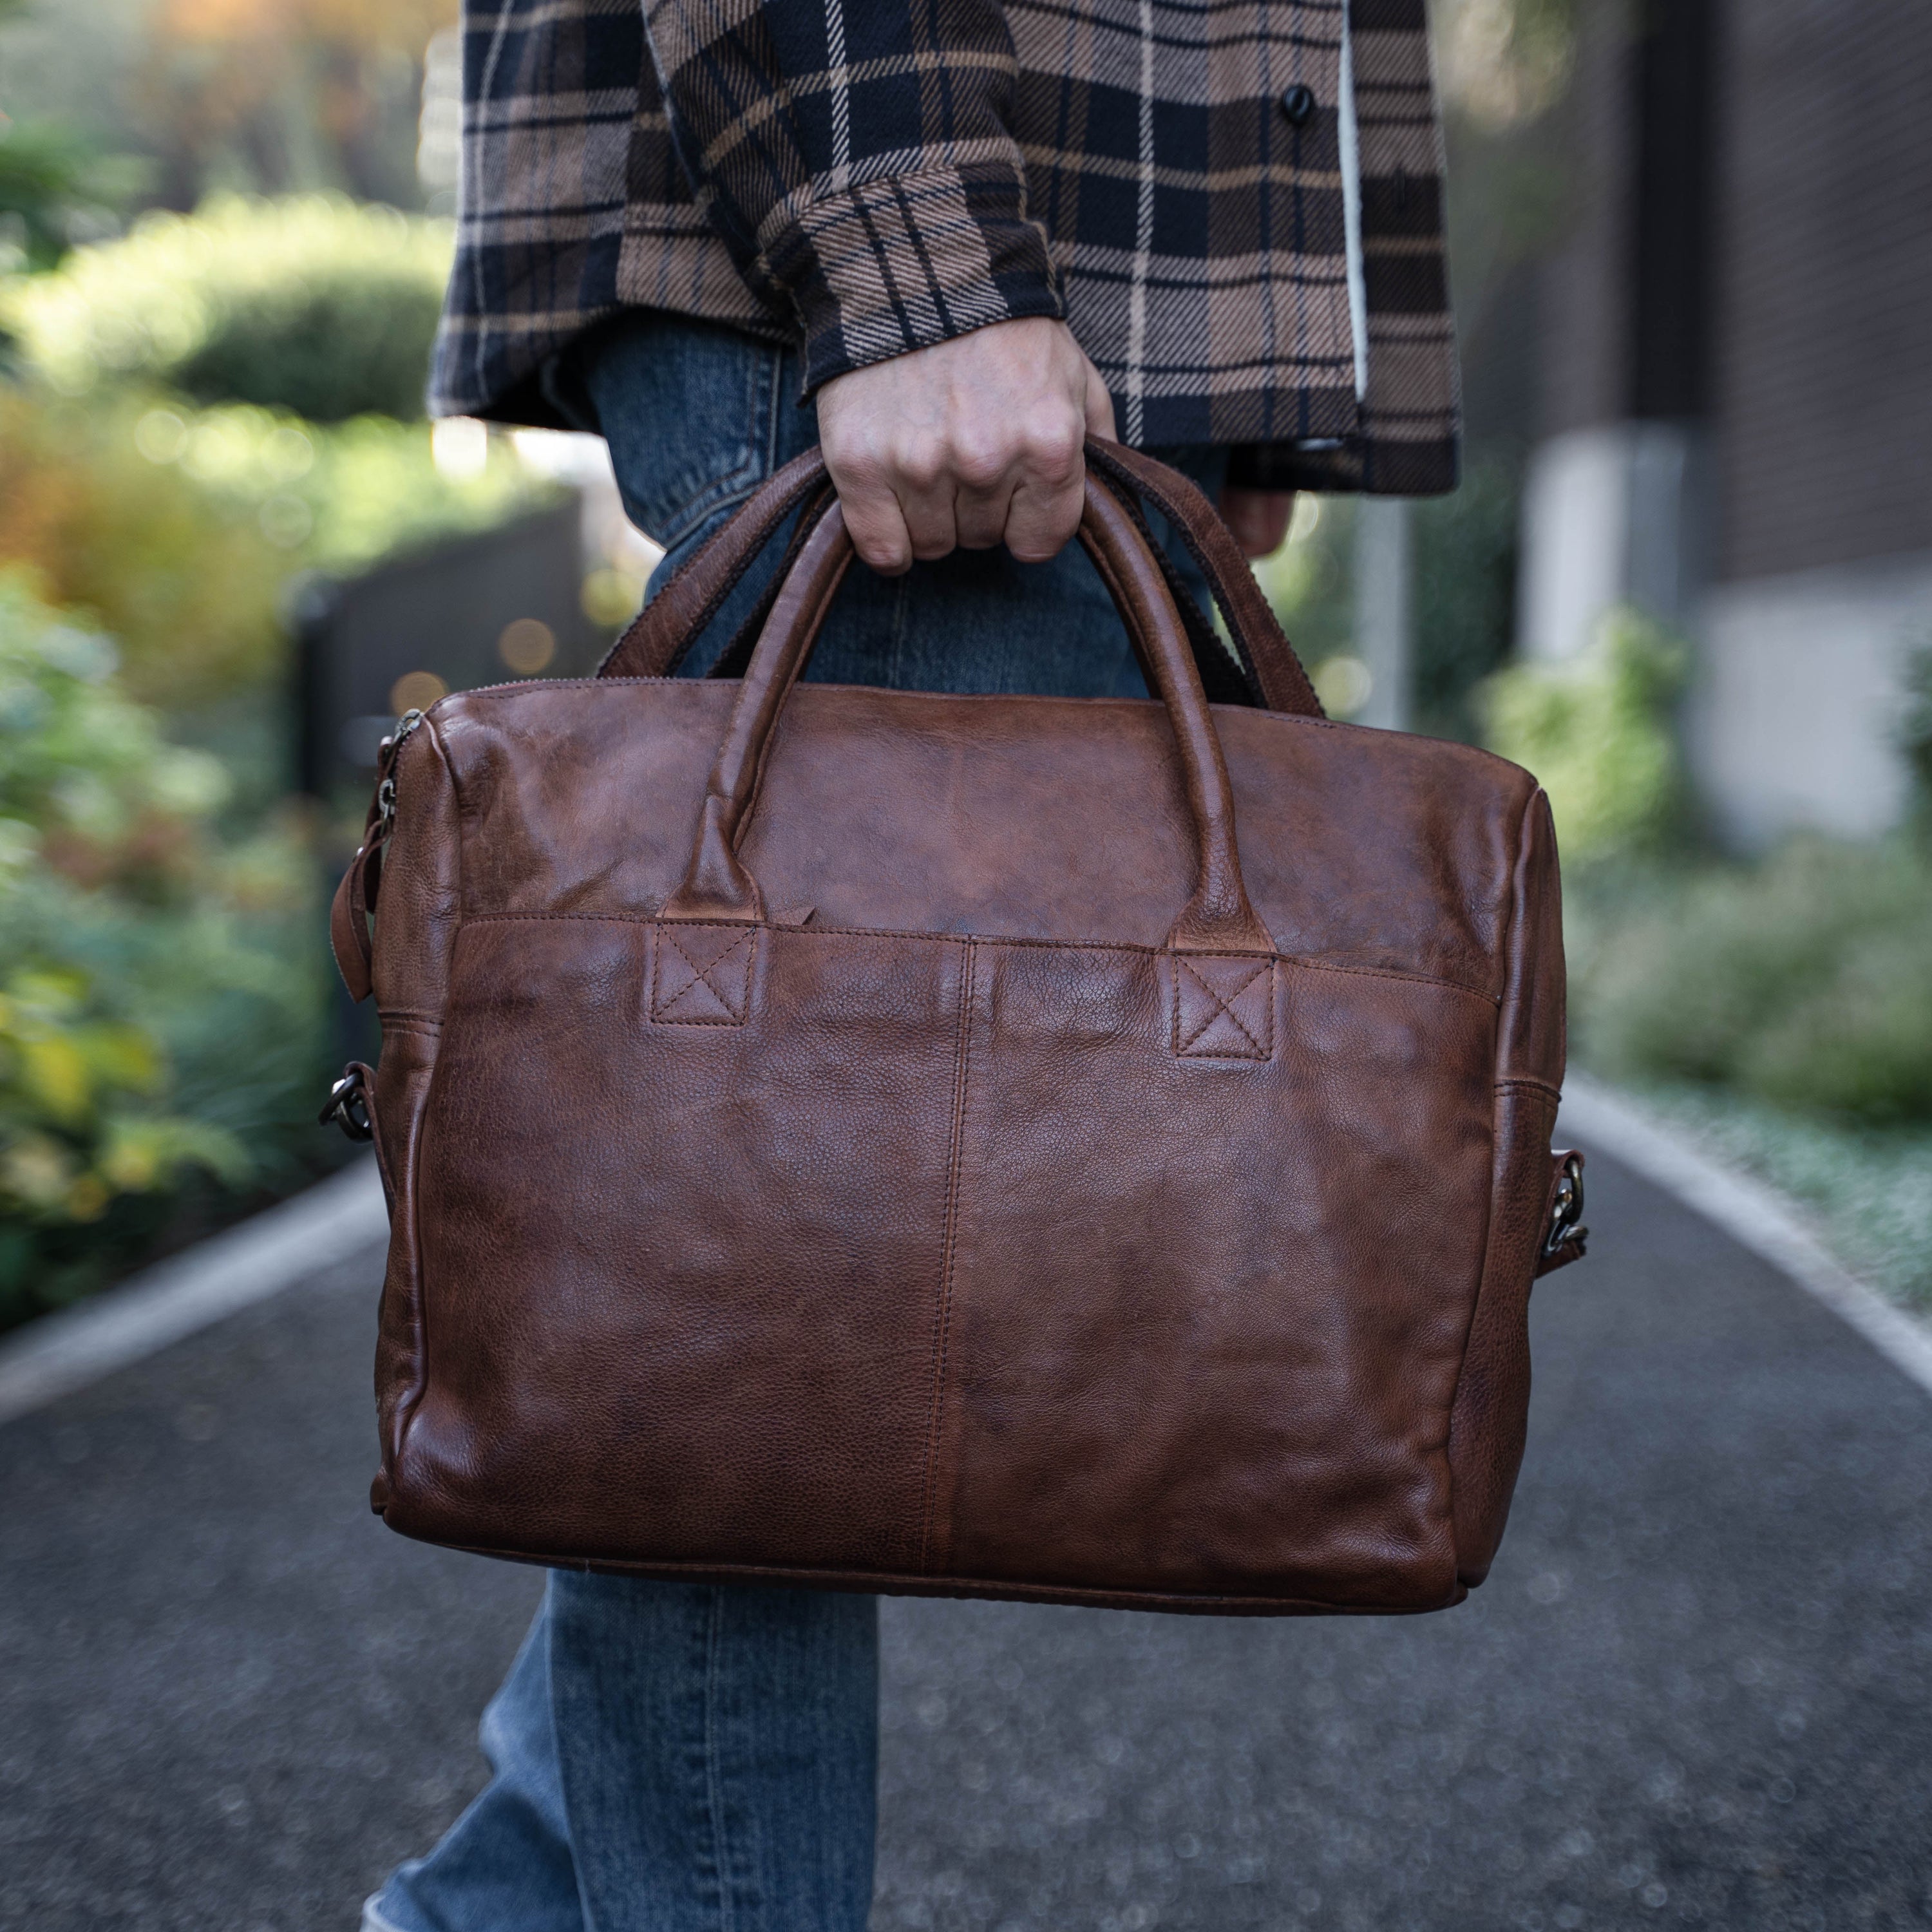 KomalC 18 Inch Leather briefcase Laptop Messenger Bags for Men and Women  Best Office School College Satchel Bag (Messenger Bag)